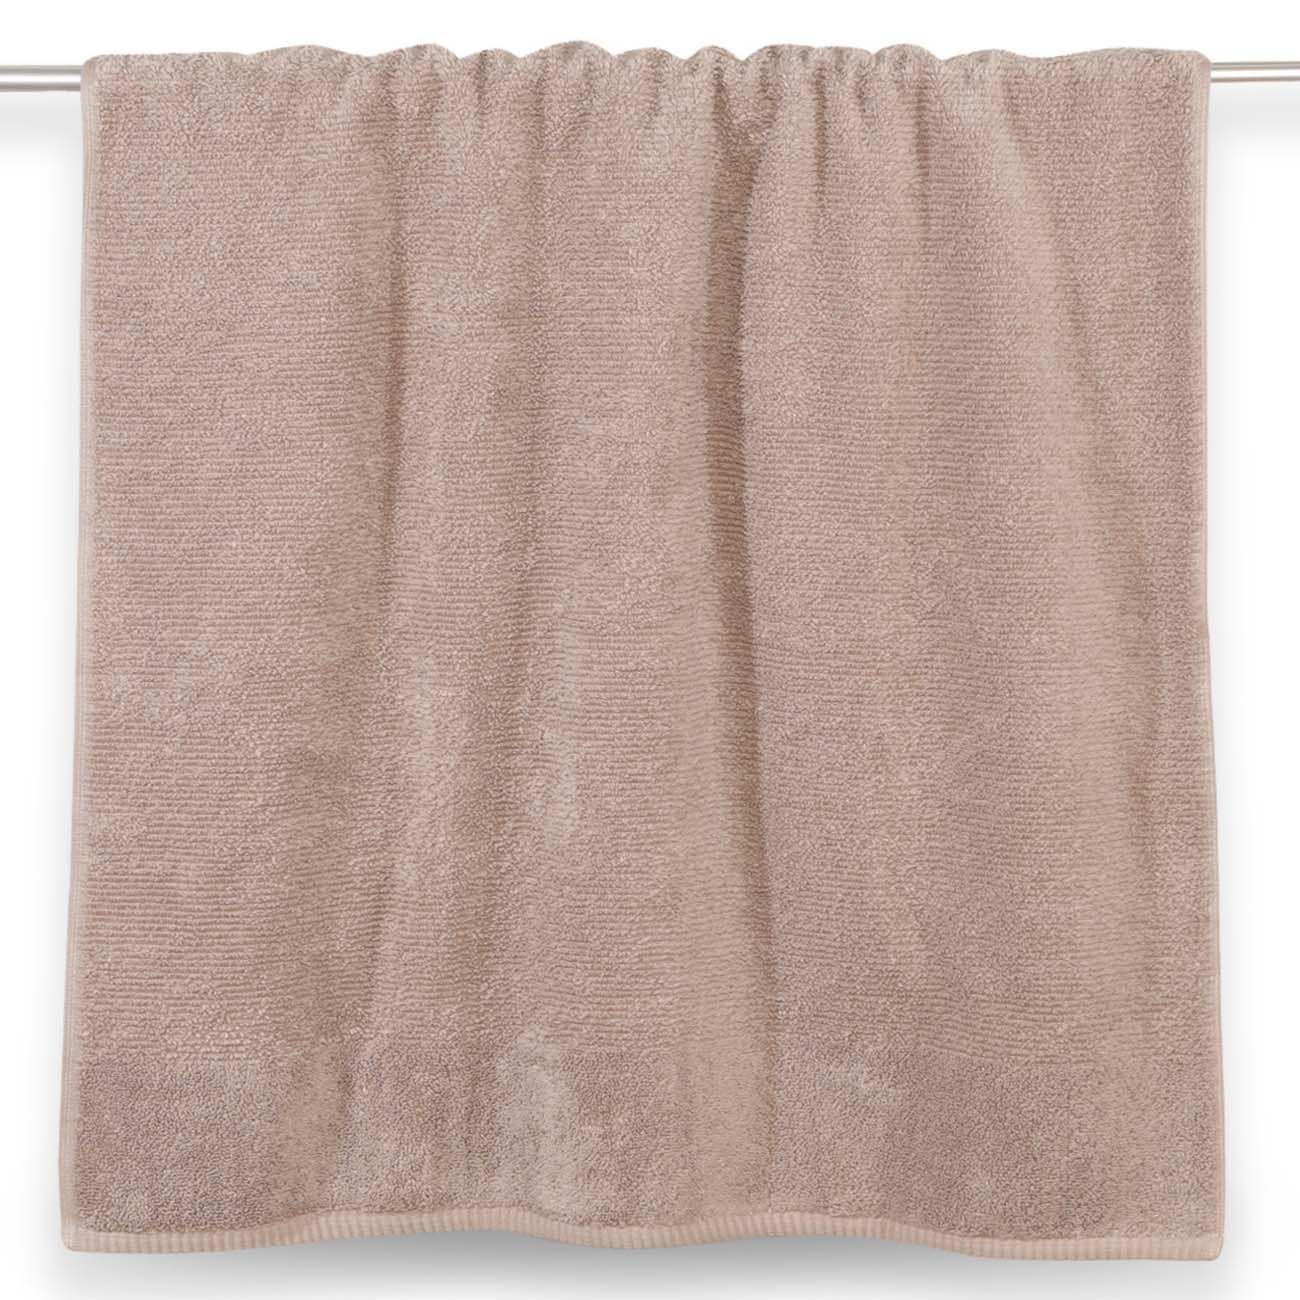 Towel, 70x140 cm, cotton, brown, Terry cotton изображение № 2